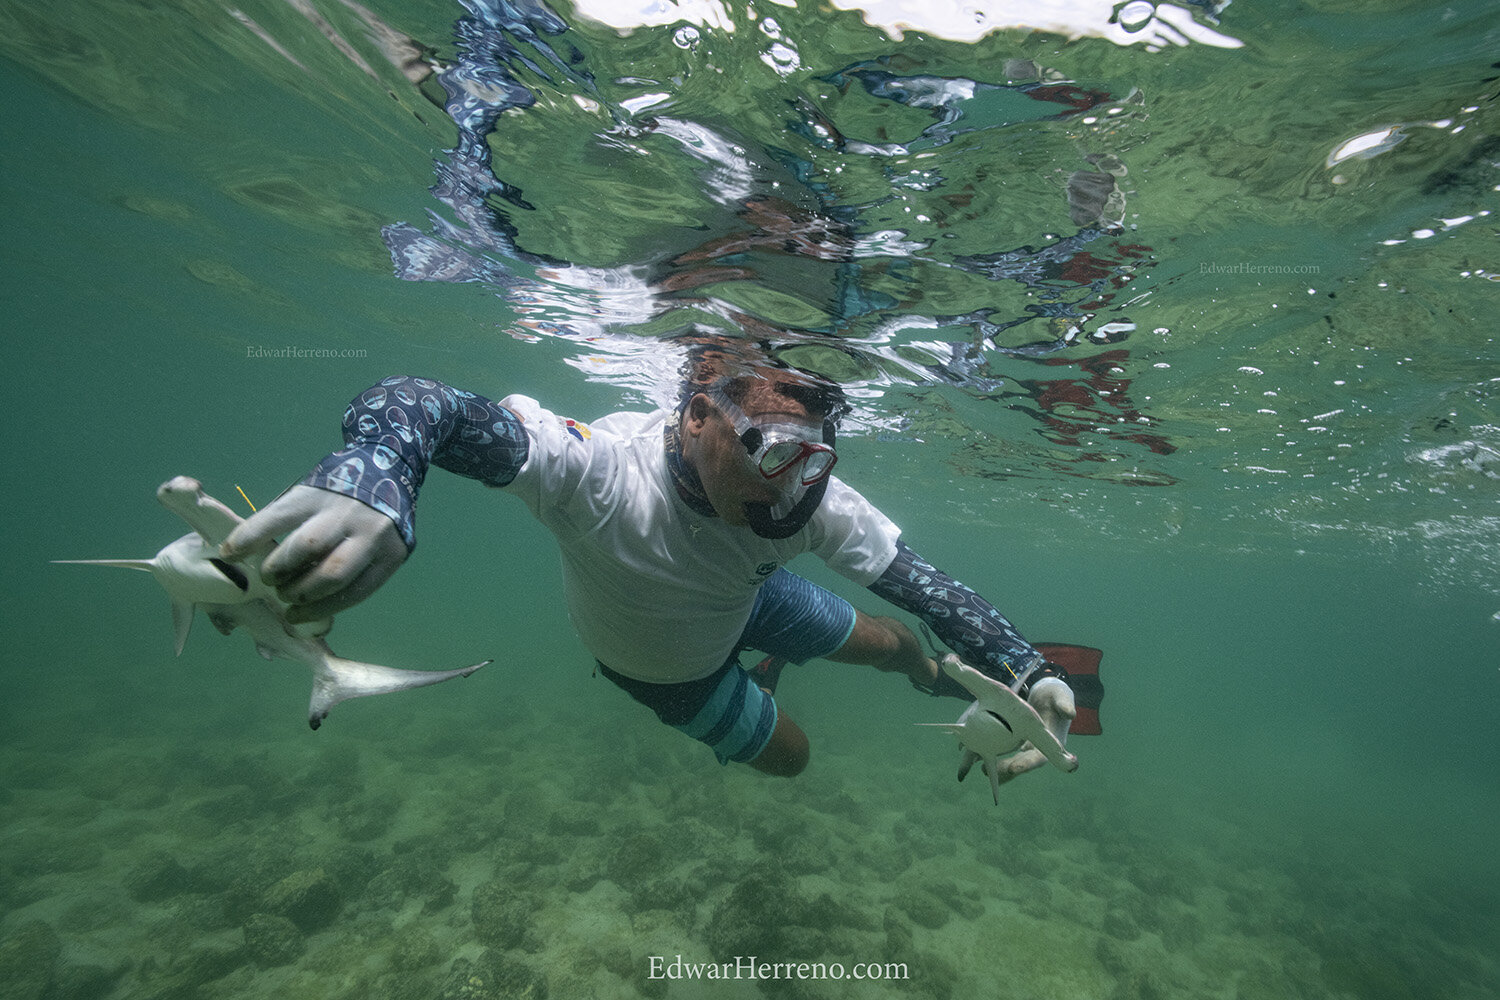 Ecuadorian scientist is helping a hammerhead shark pup to resuming normal behavior - Galapagos.